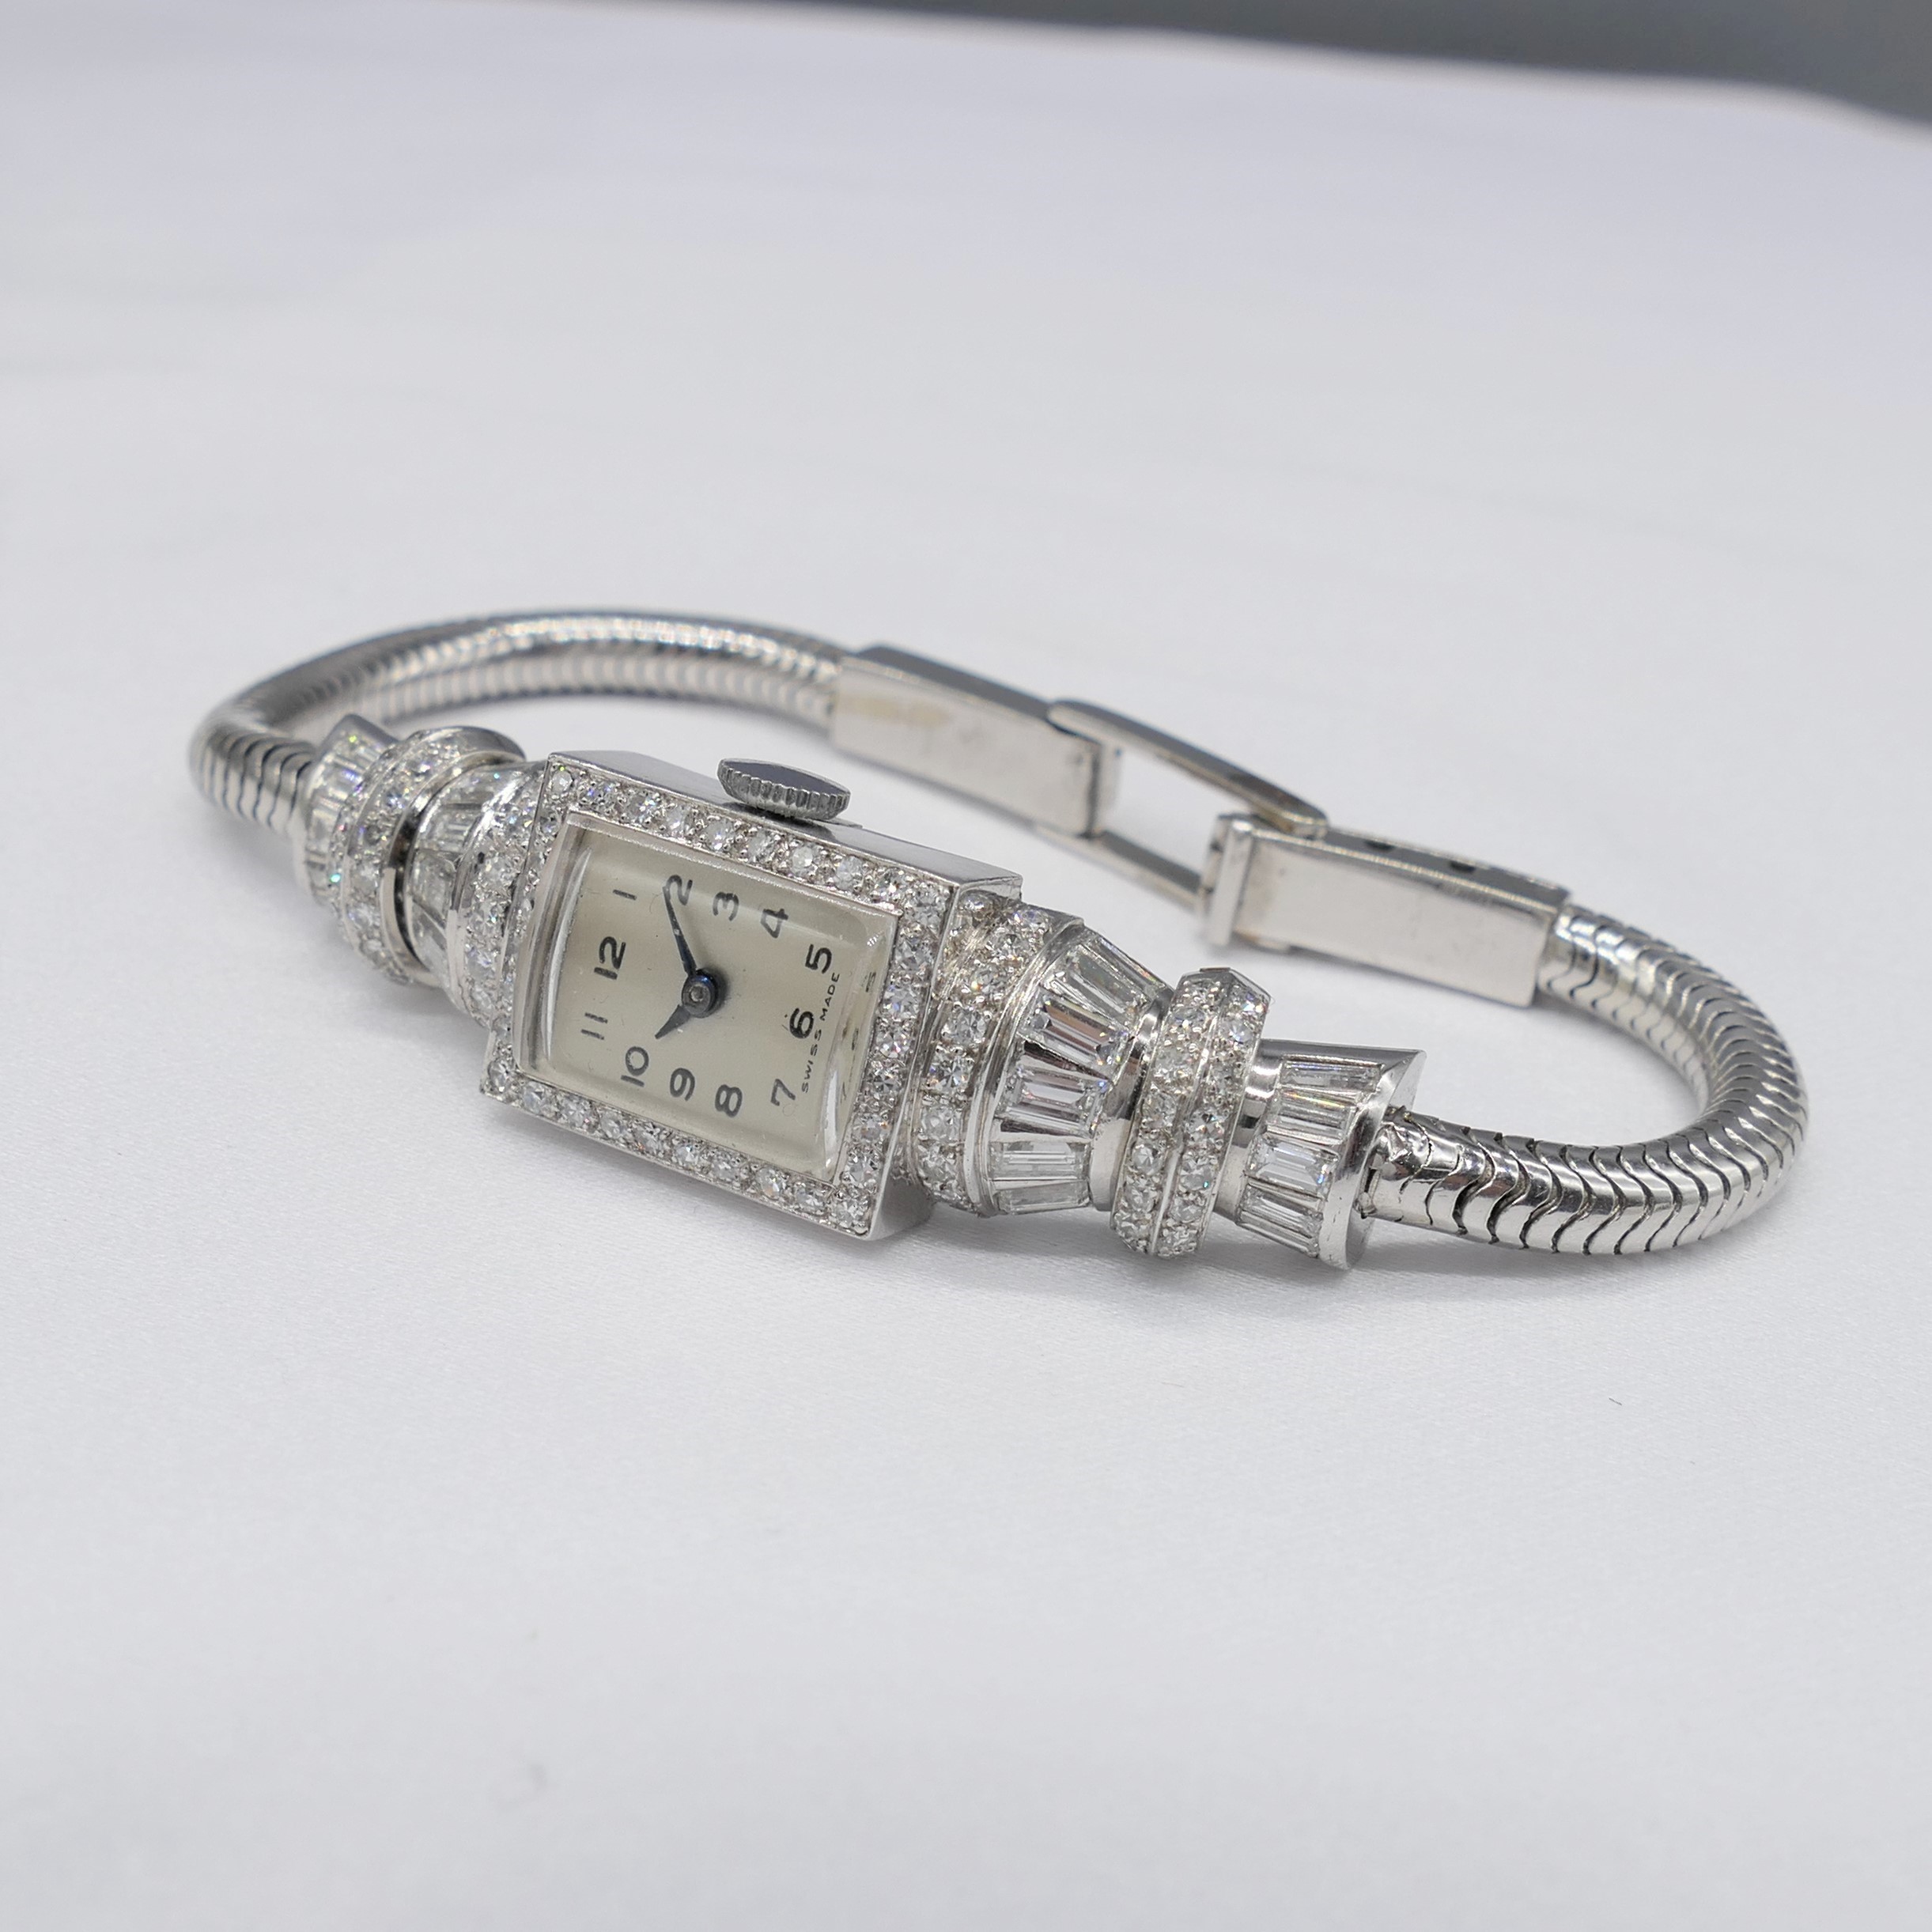 Vintage 3.60 Carat Diamond Ladies Mechanical Wristwatch, With Gifting Box - Image 3 of 8